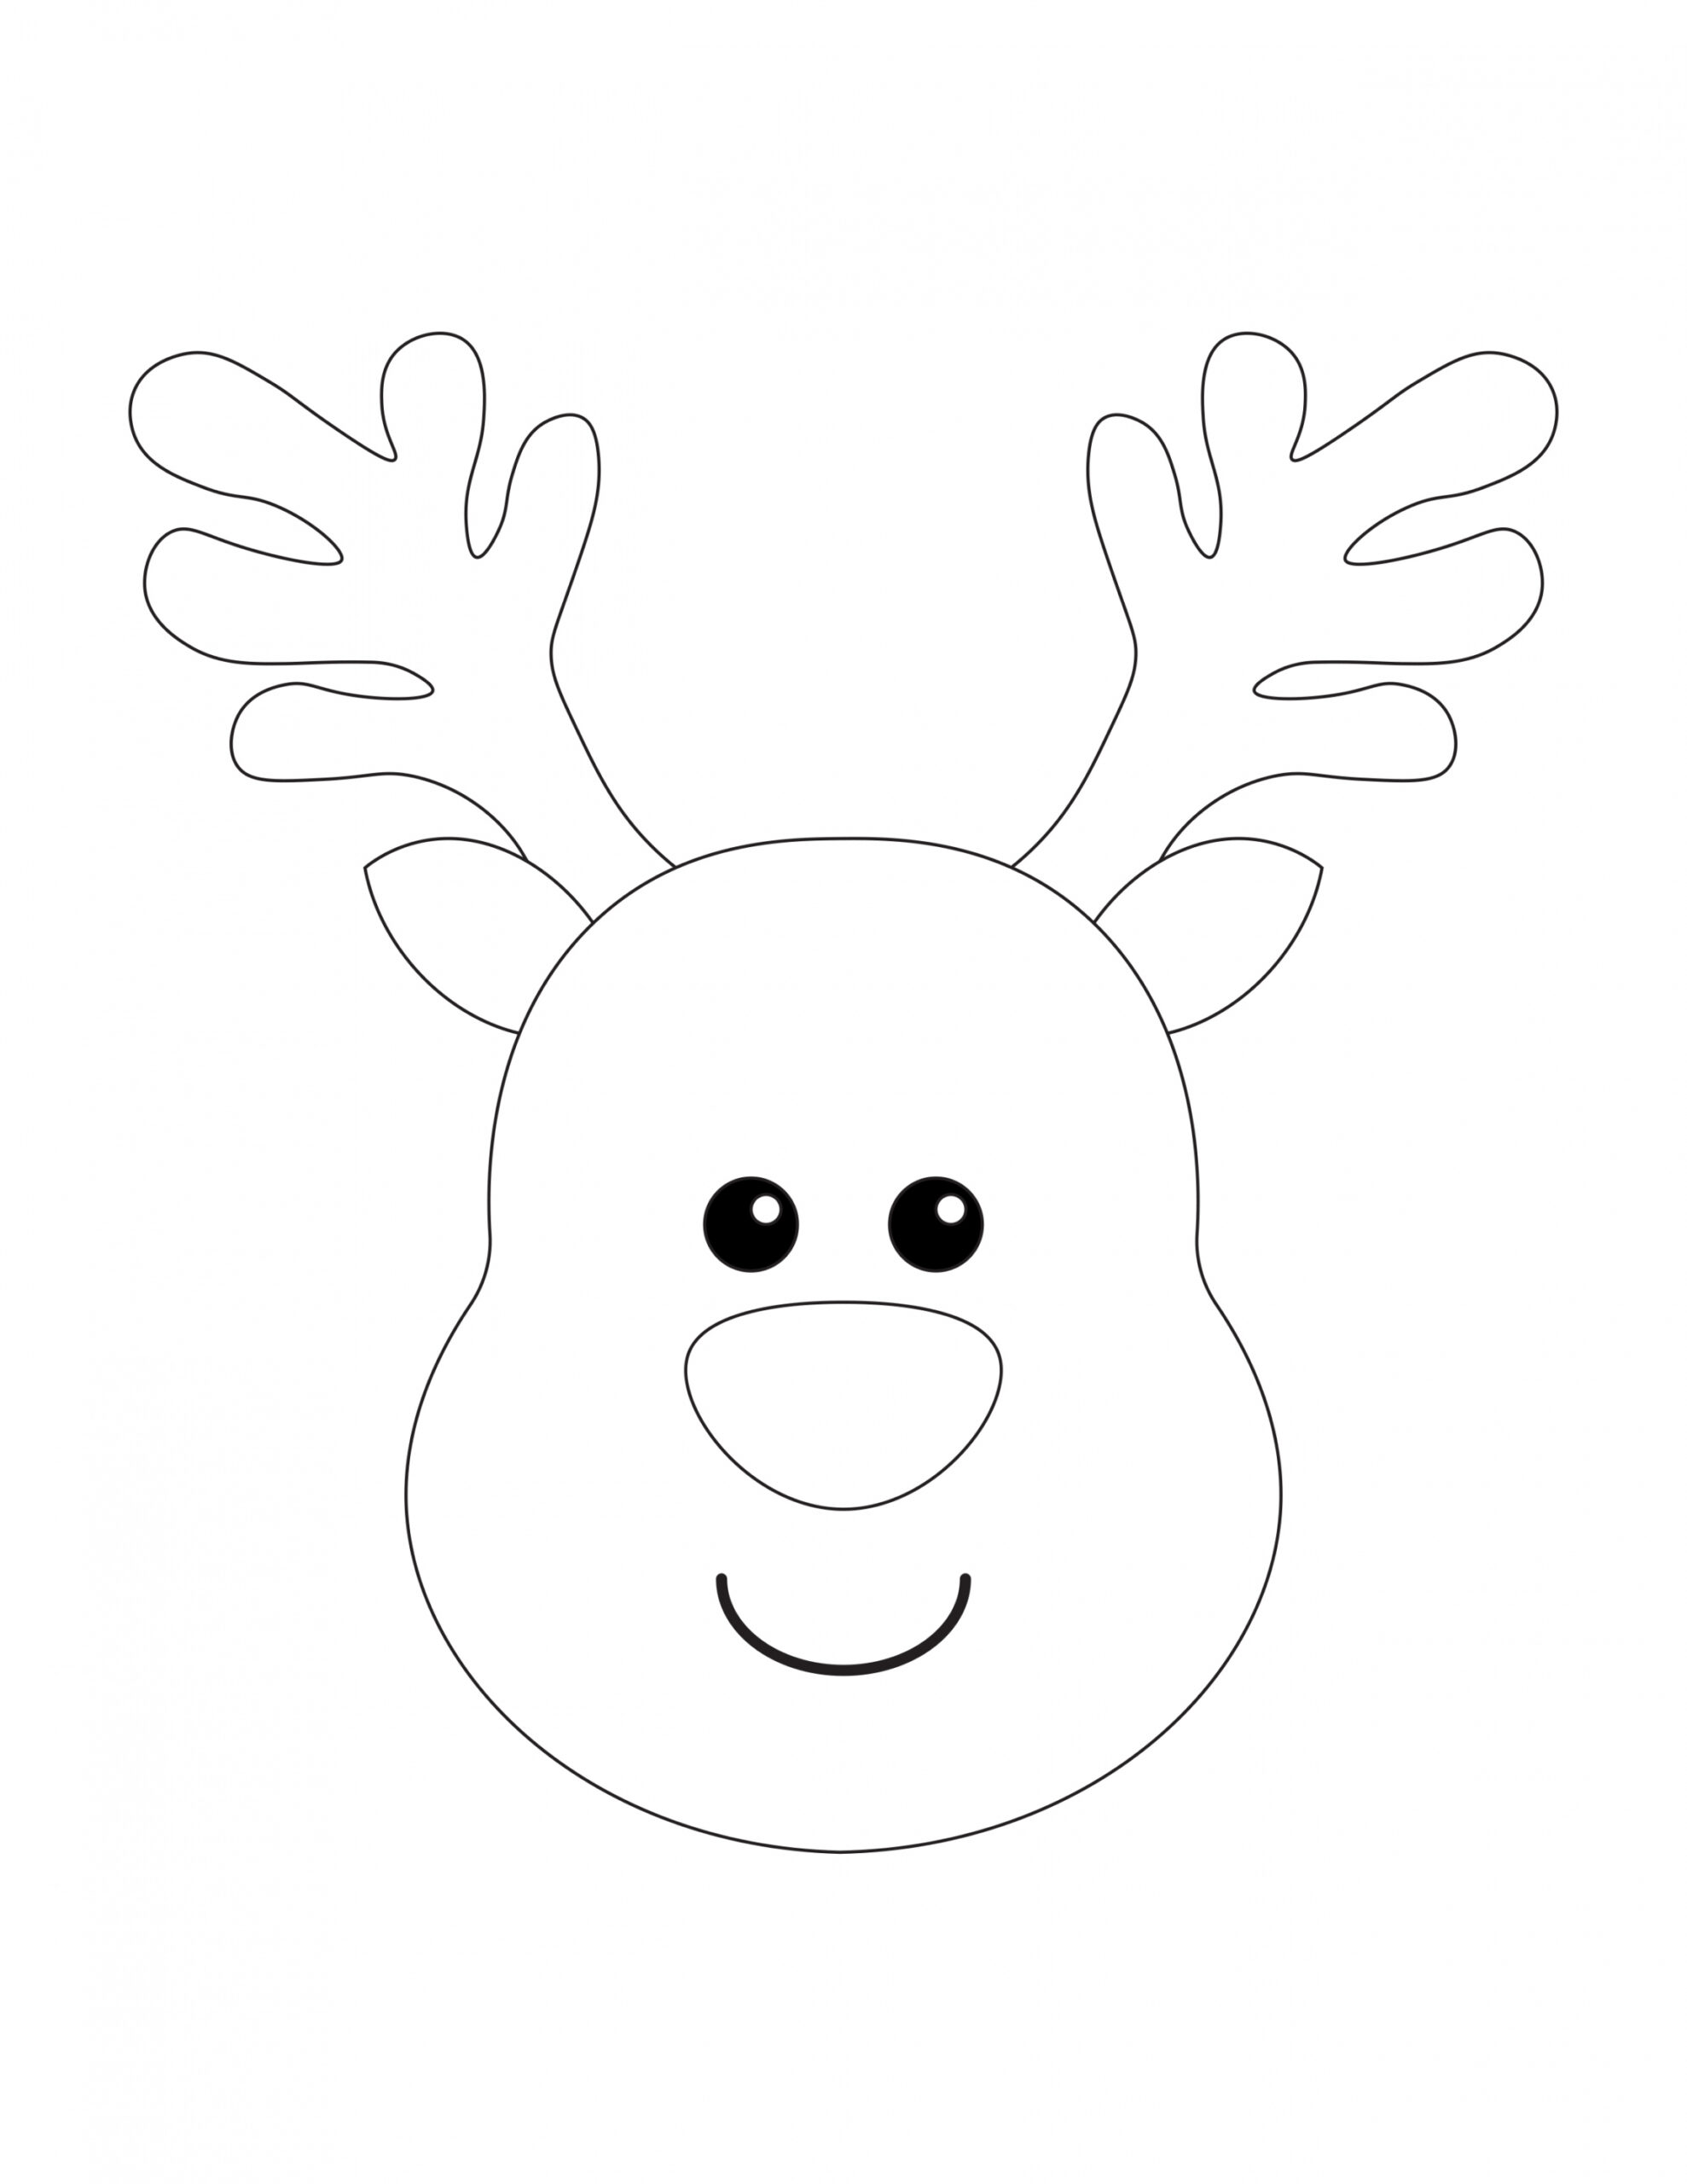 Free Printable Reindeer Templates - Daily Printables - FREE Printables - Reindeer Face Template